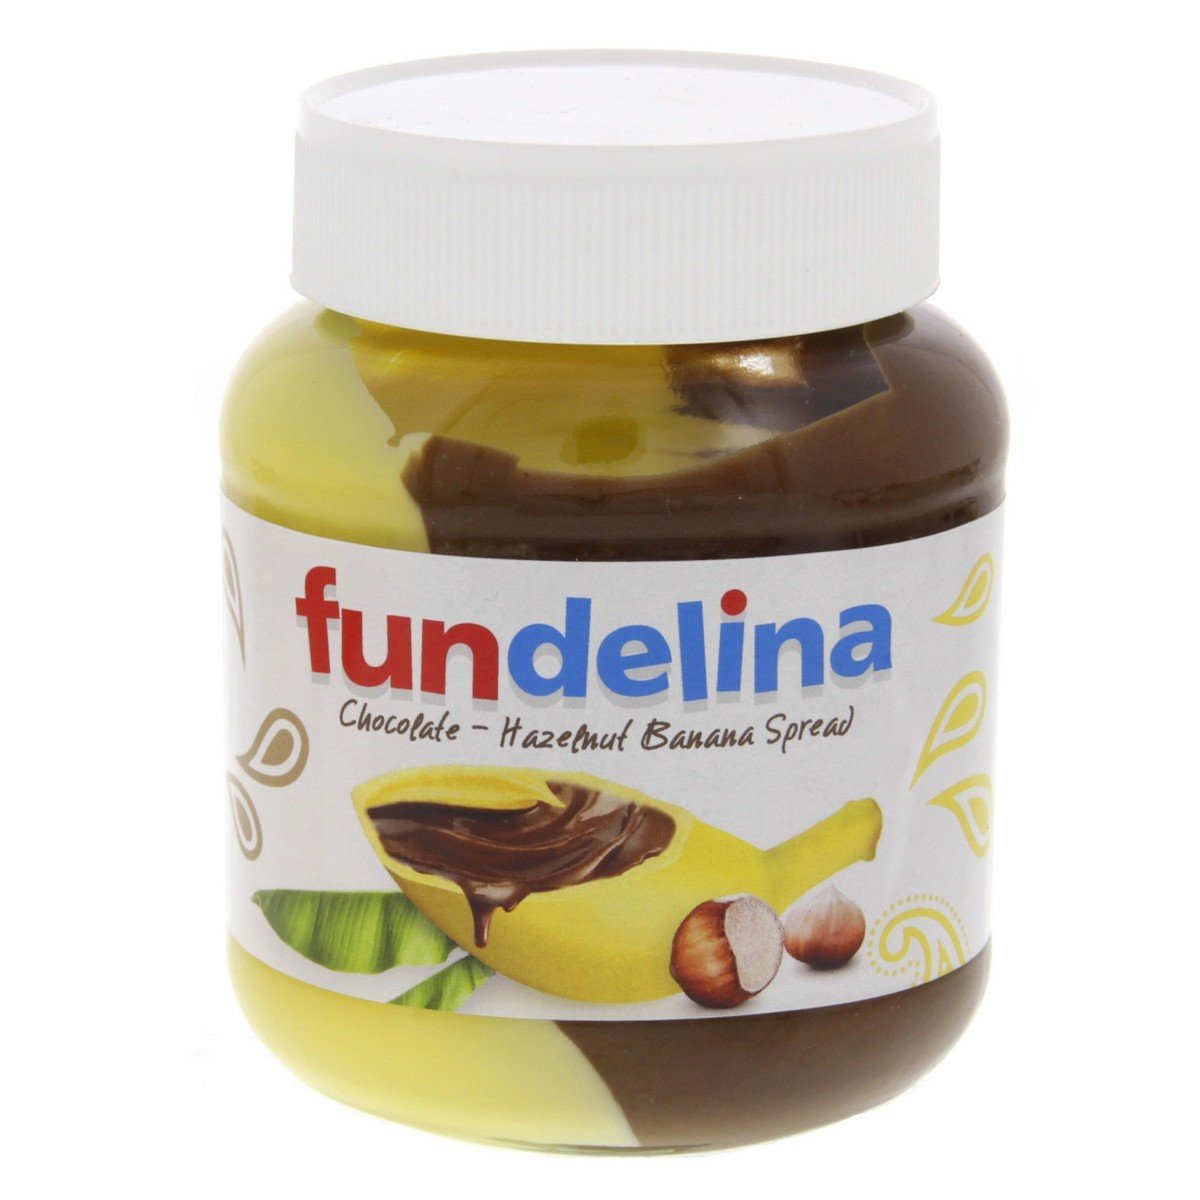 Fun Delina Chocolate Hazelnut Banana Spread 350 g